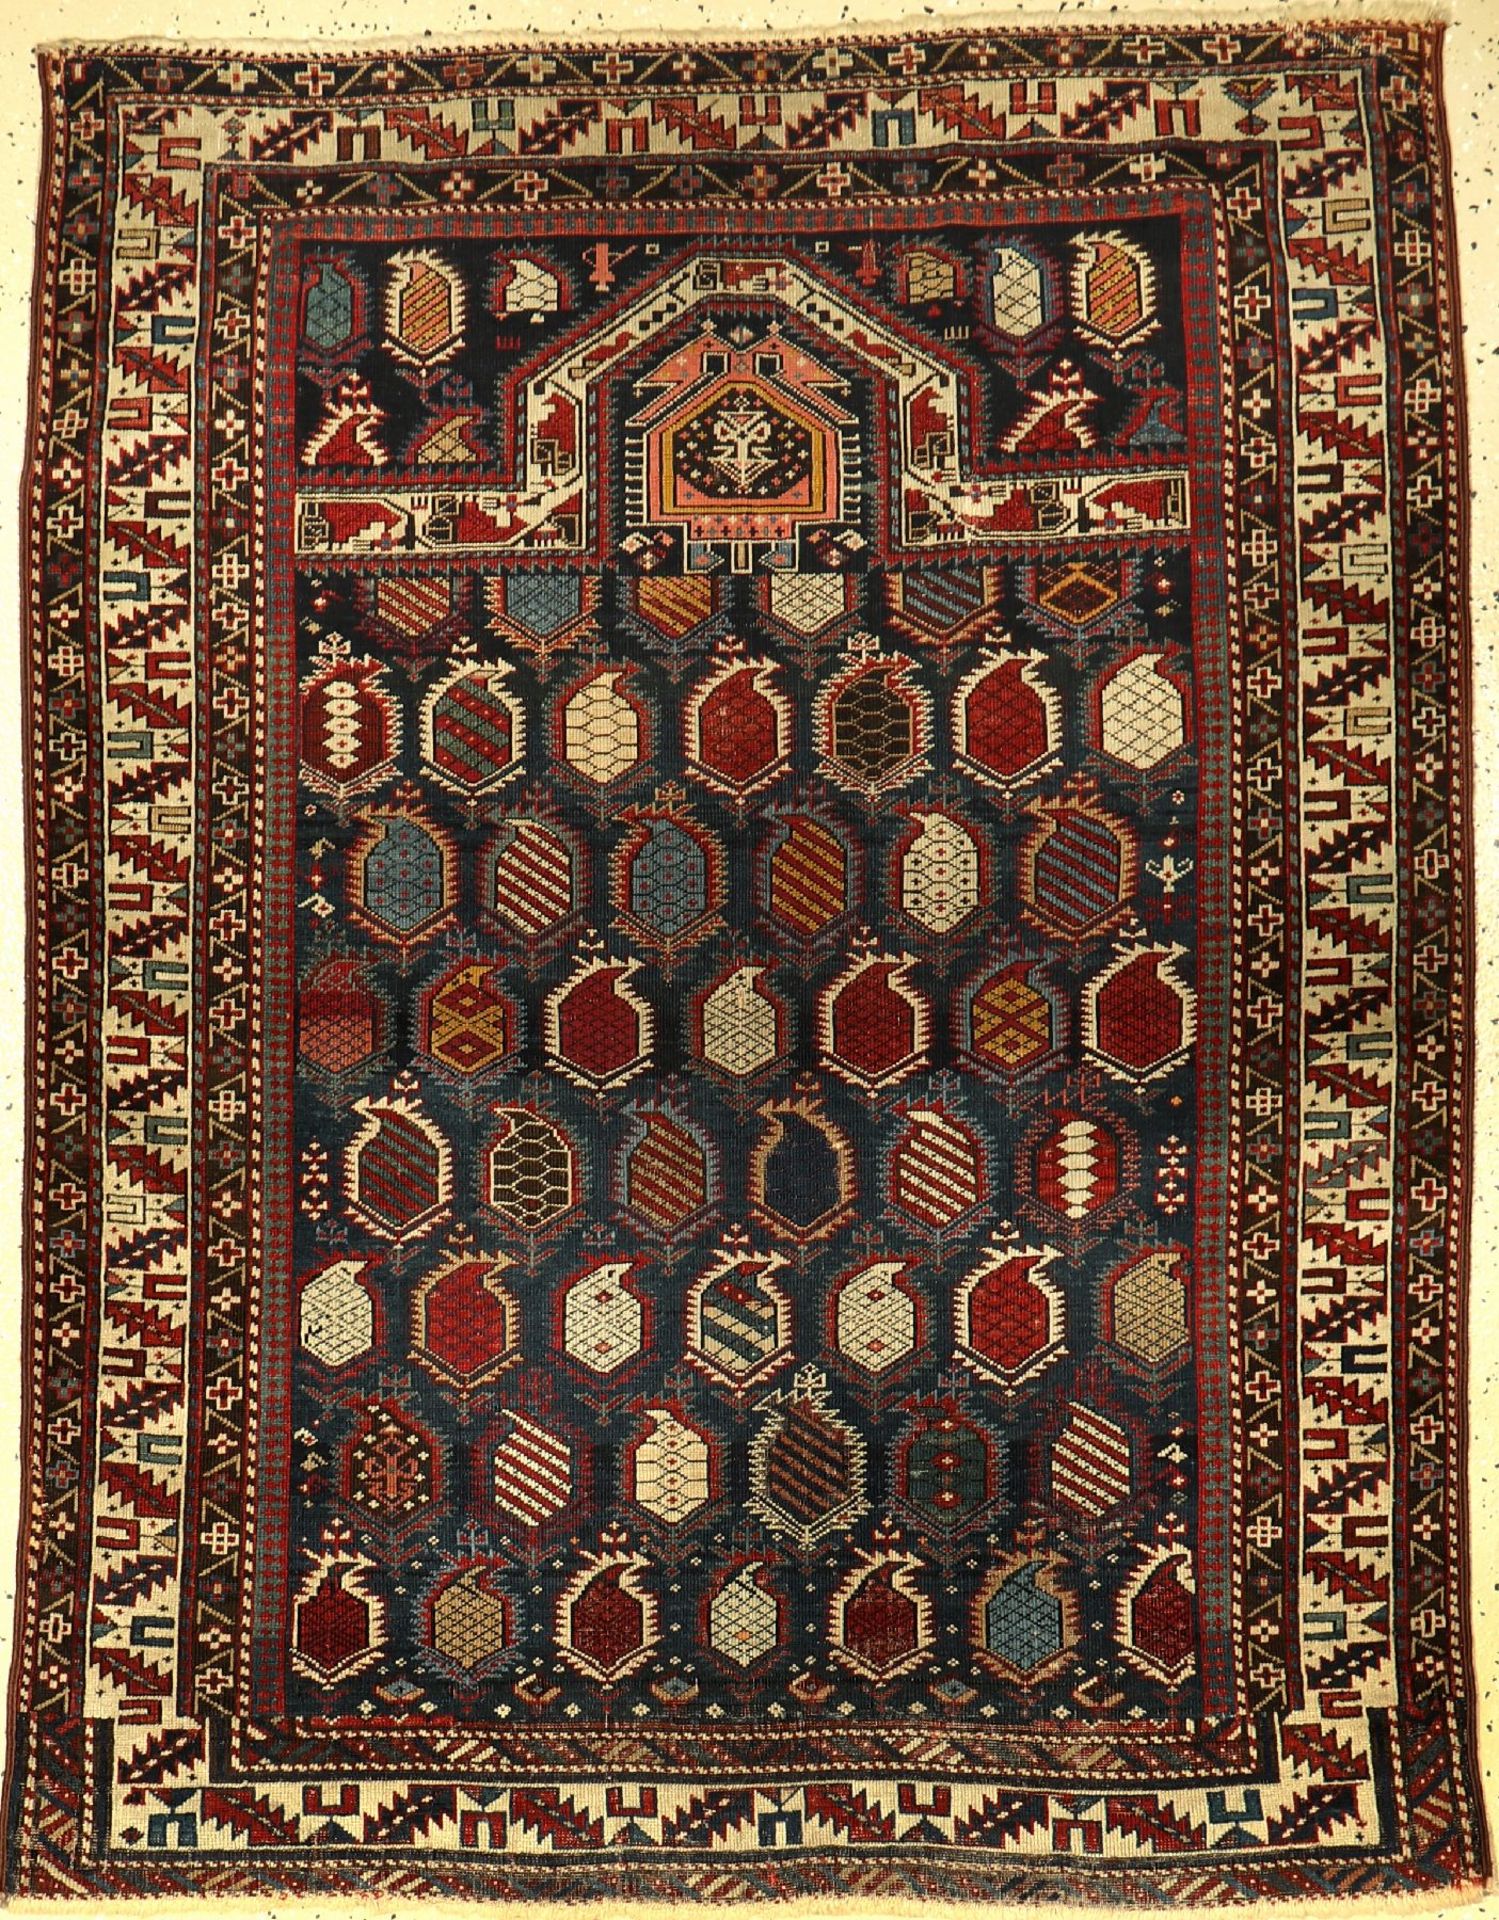 Fine Marasali prayer rug, antique, Caucasus, 19th century, wool on wool, approx. 138 x 107 cm,